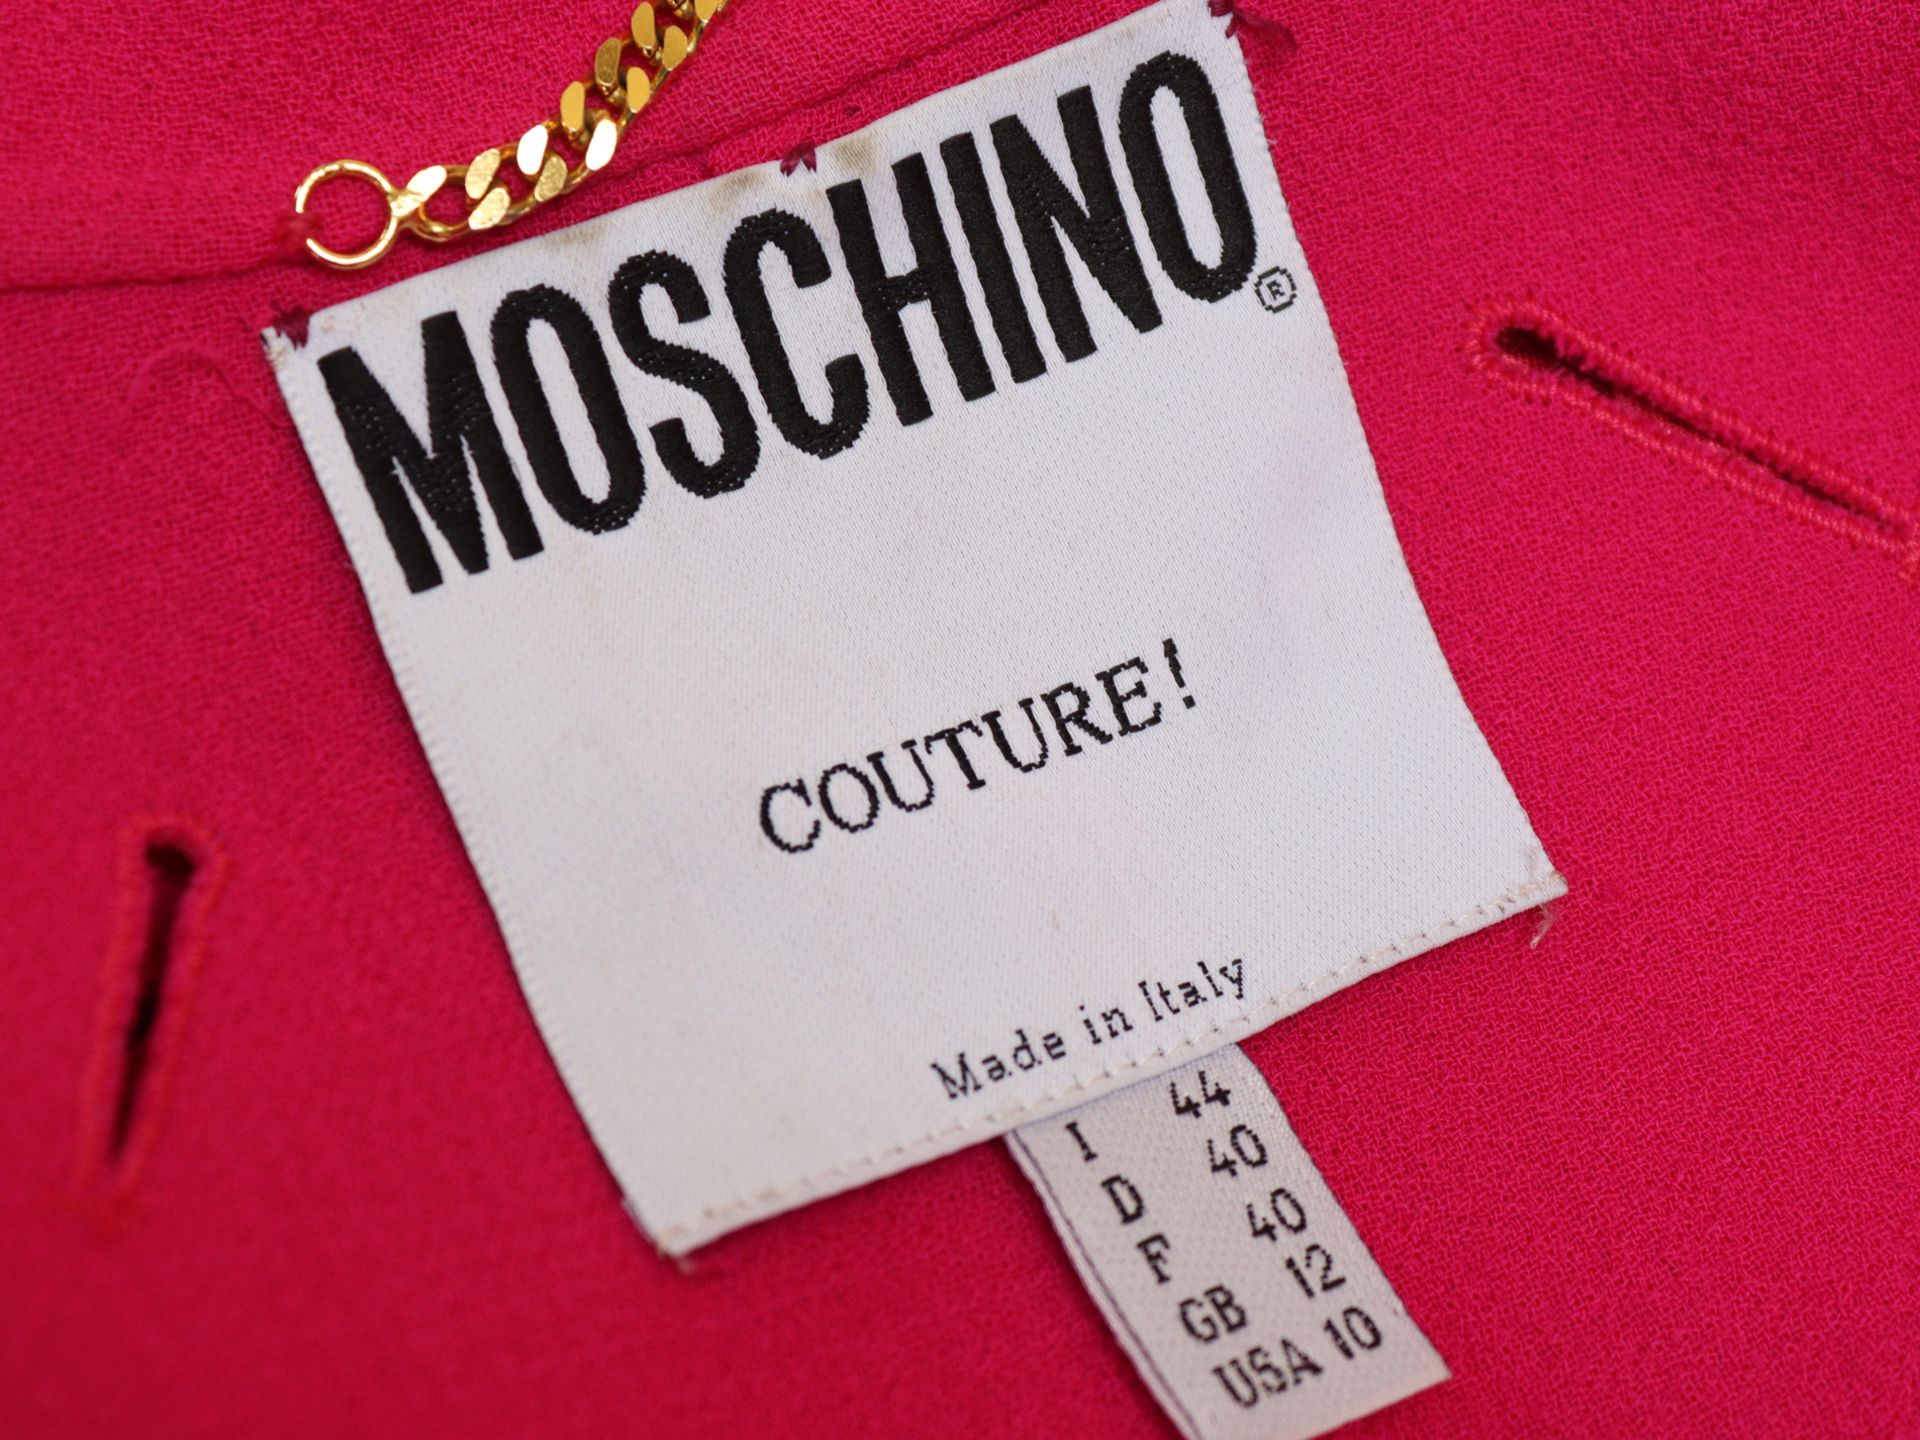 Moschino - Set - Image 8 of 8